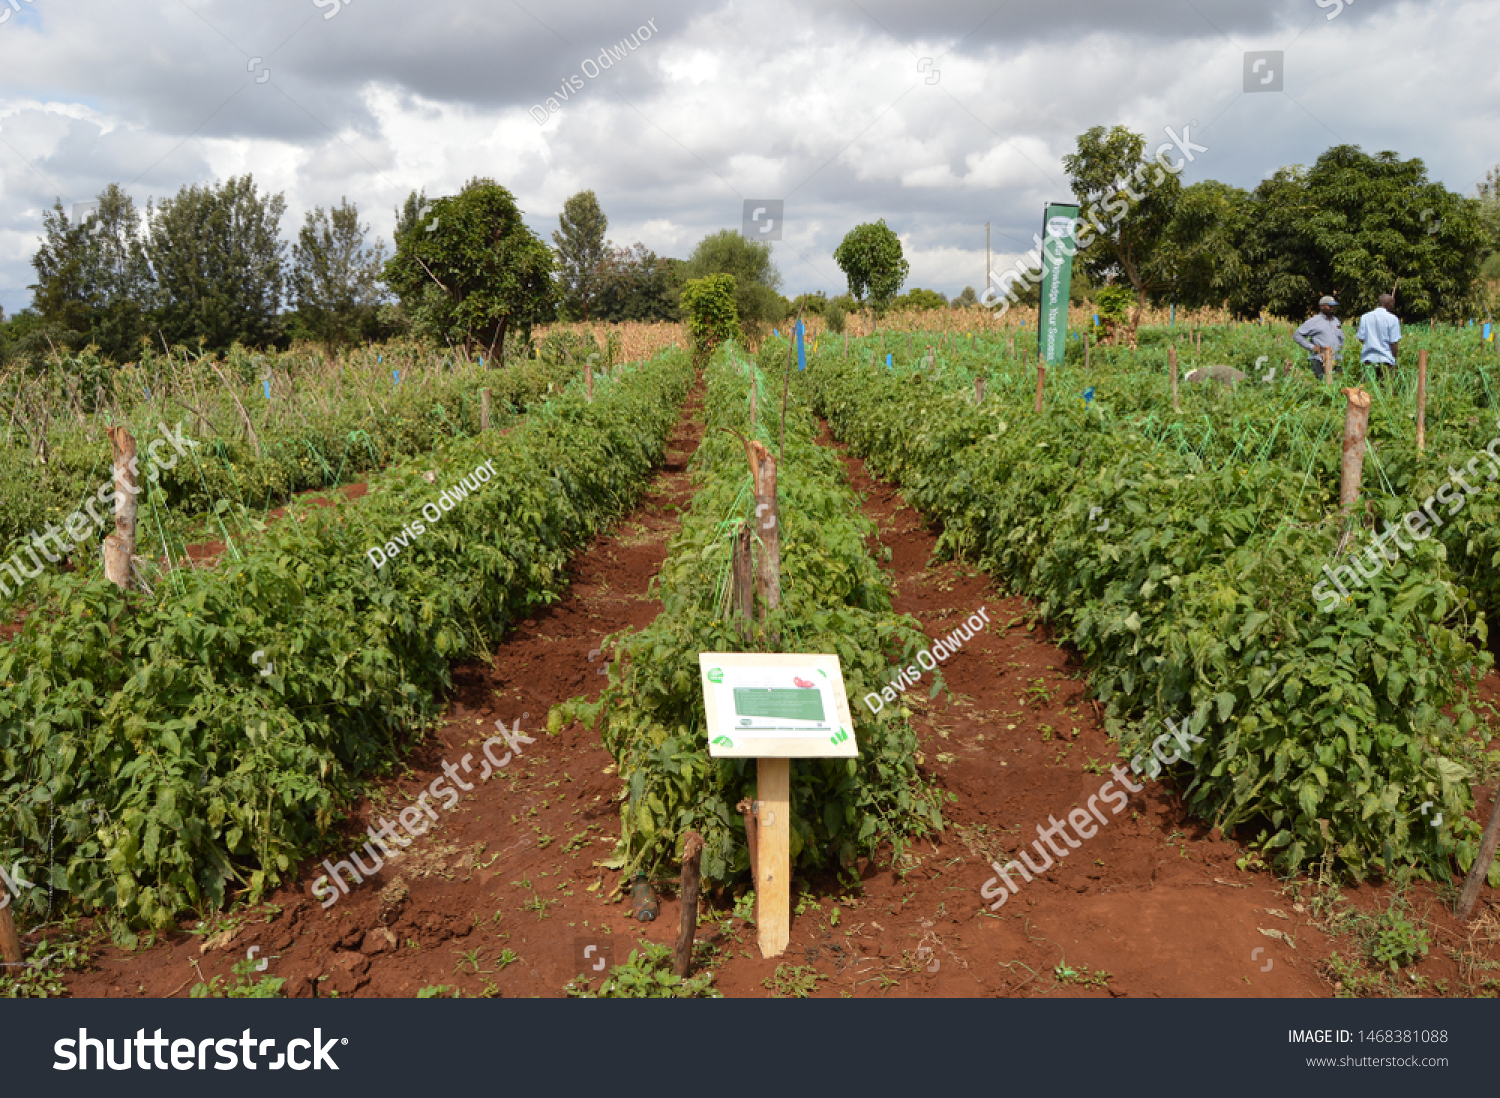 Nyeri, Nyeri County / Kenya - September 11th 2018: Tomatoes in a farm. #1468381088